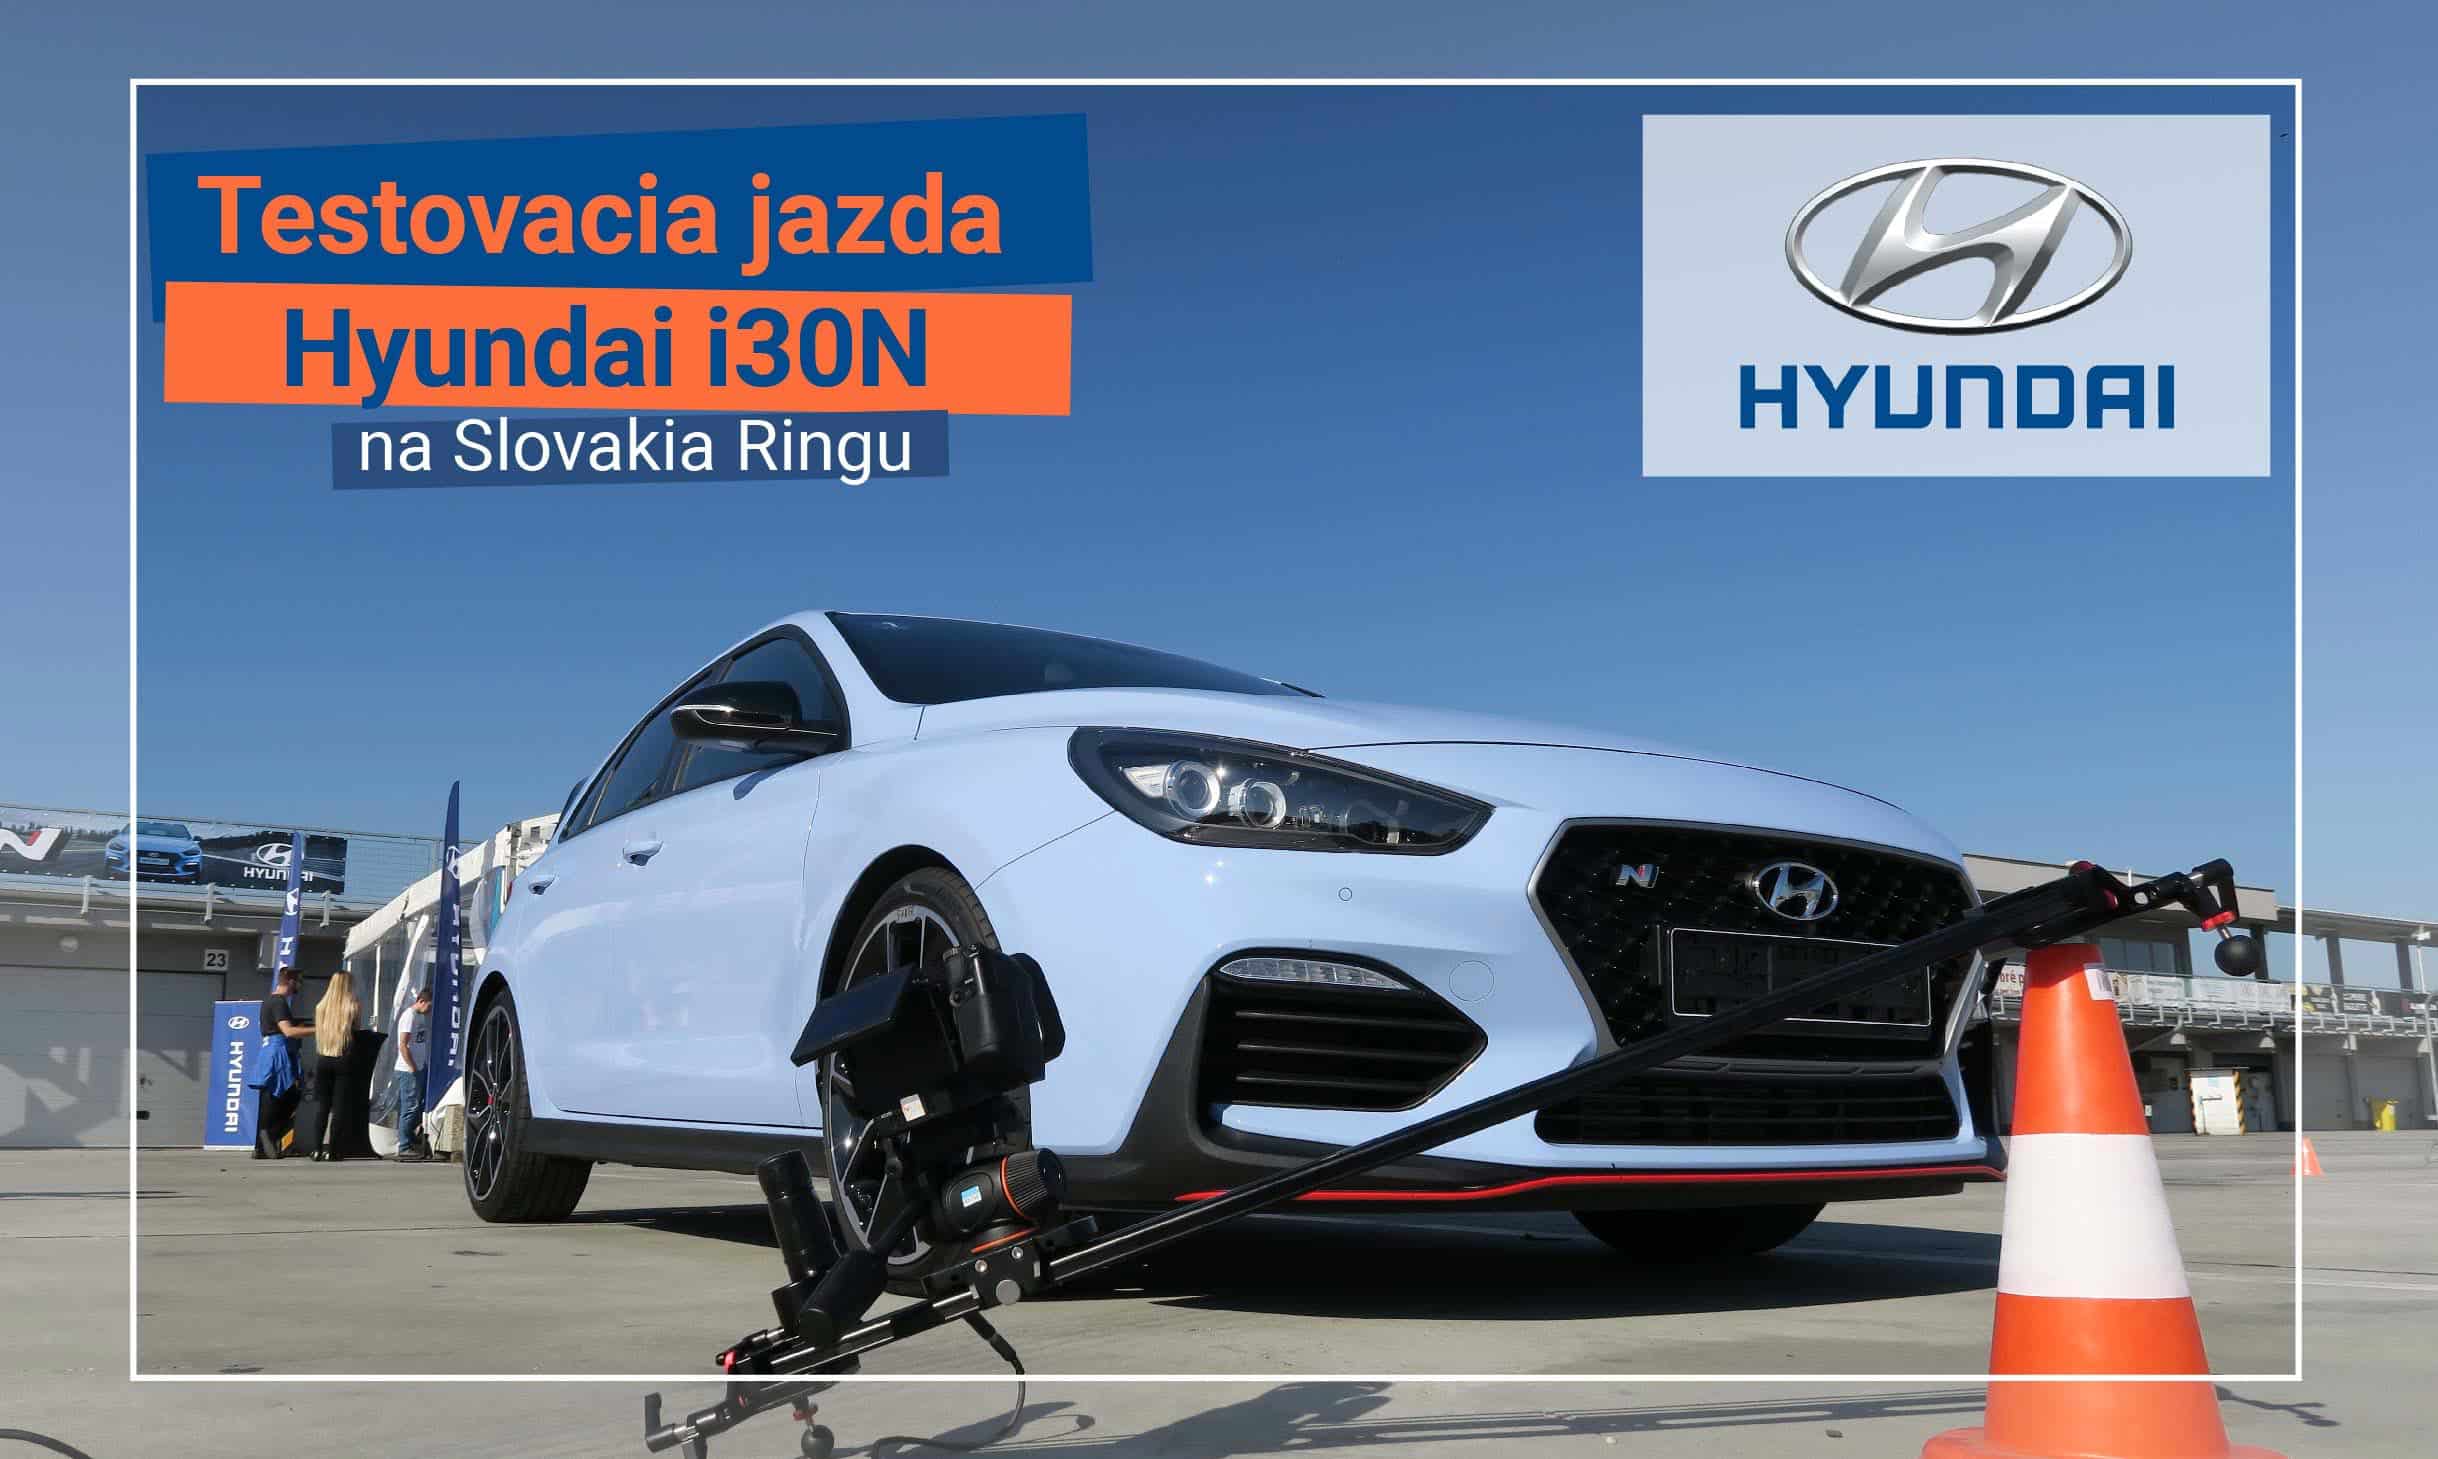 Predstavenie Hyundai i30n na Slovakia Ringu mlv.sk animacie video grafika reklamne studio ilustracia fotografia livestream videostream